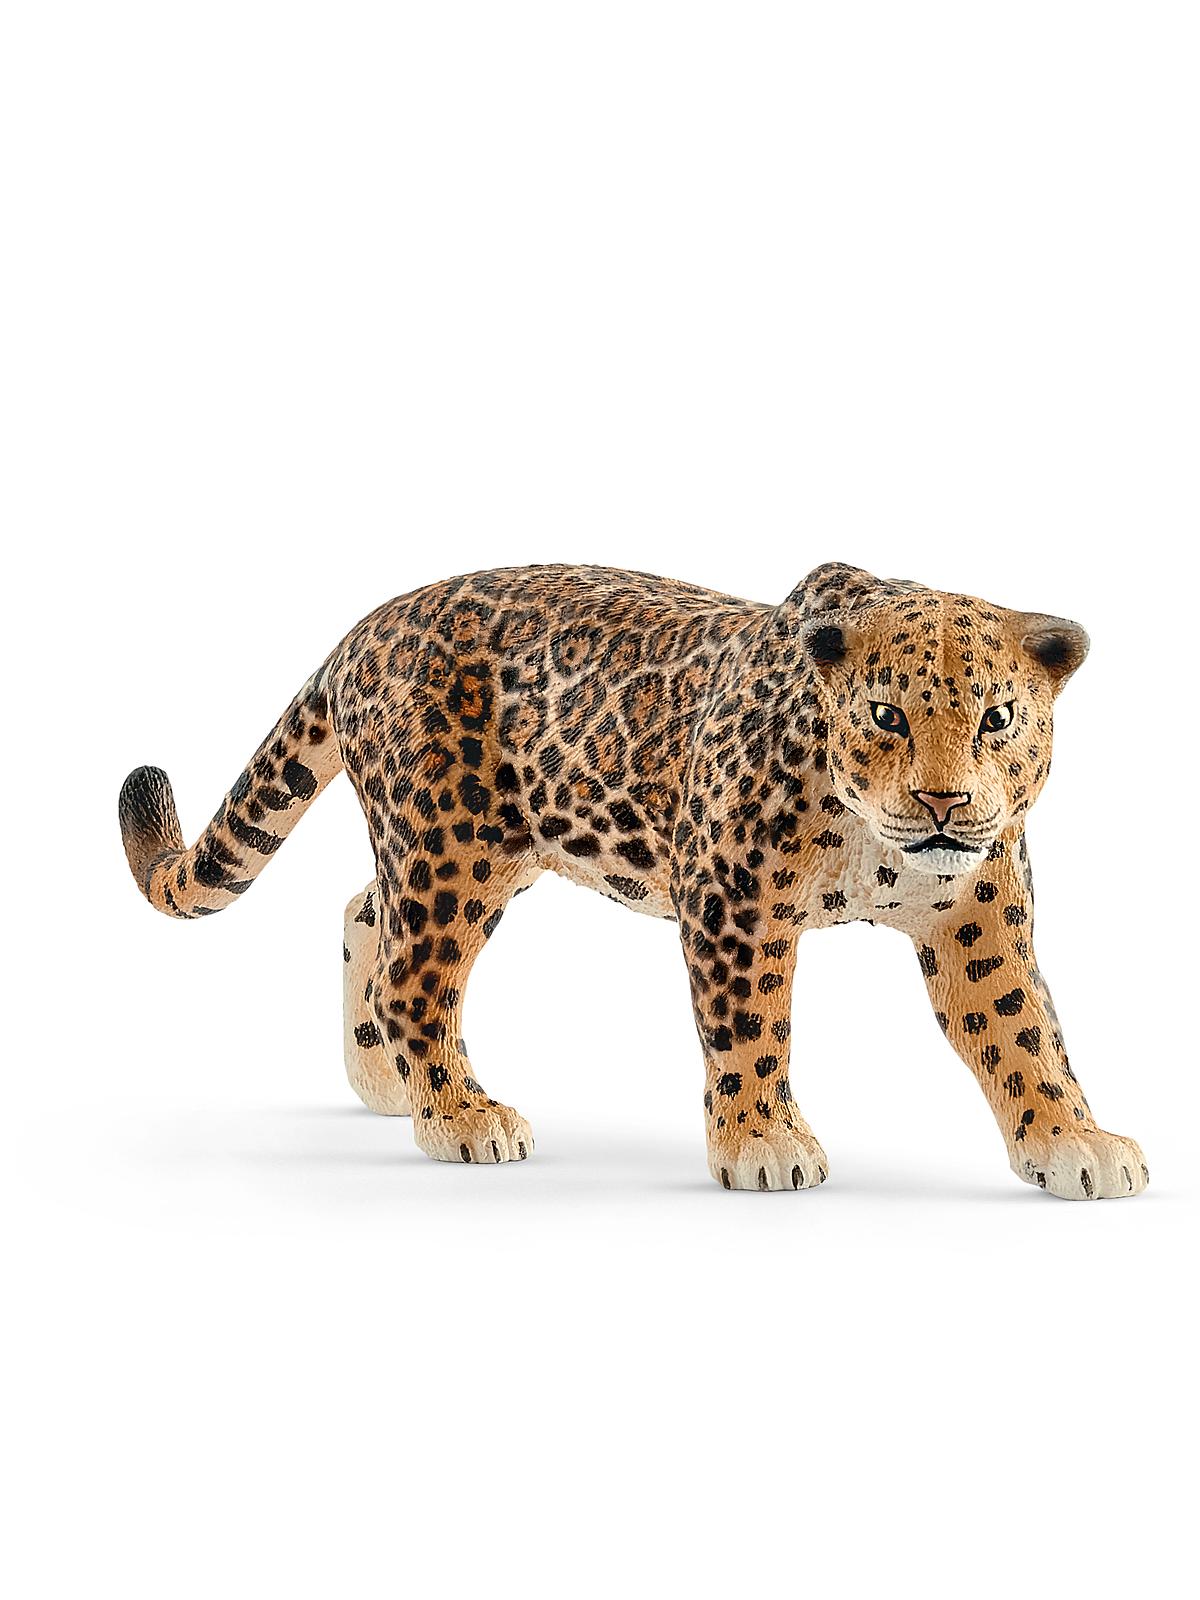 Wild Life Animals Jaguar